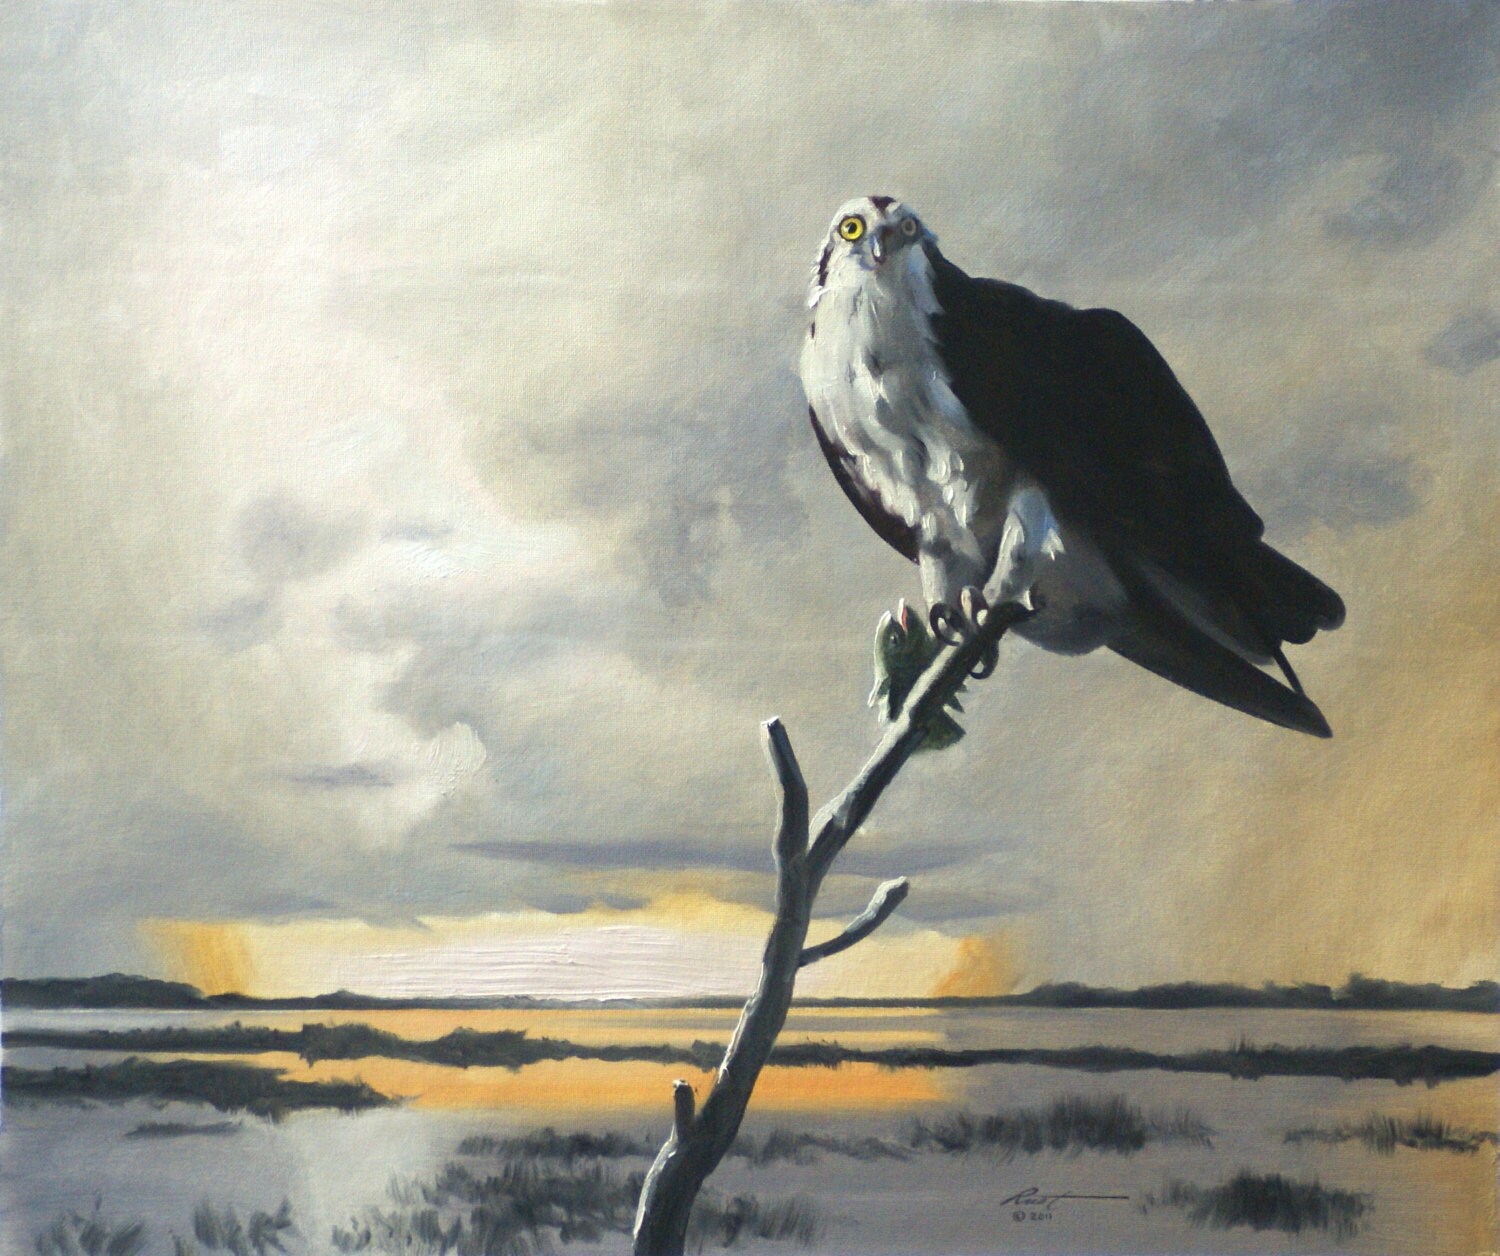 Osprey fish eagle wildlife bird 20x24 oil on canvas painting